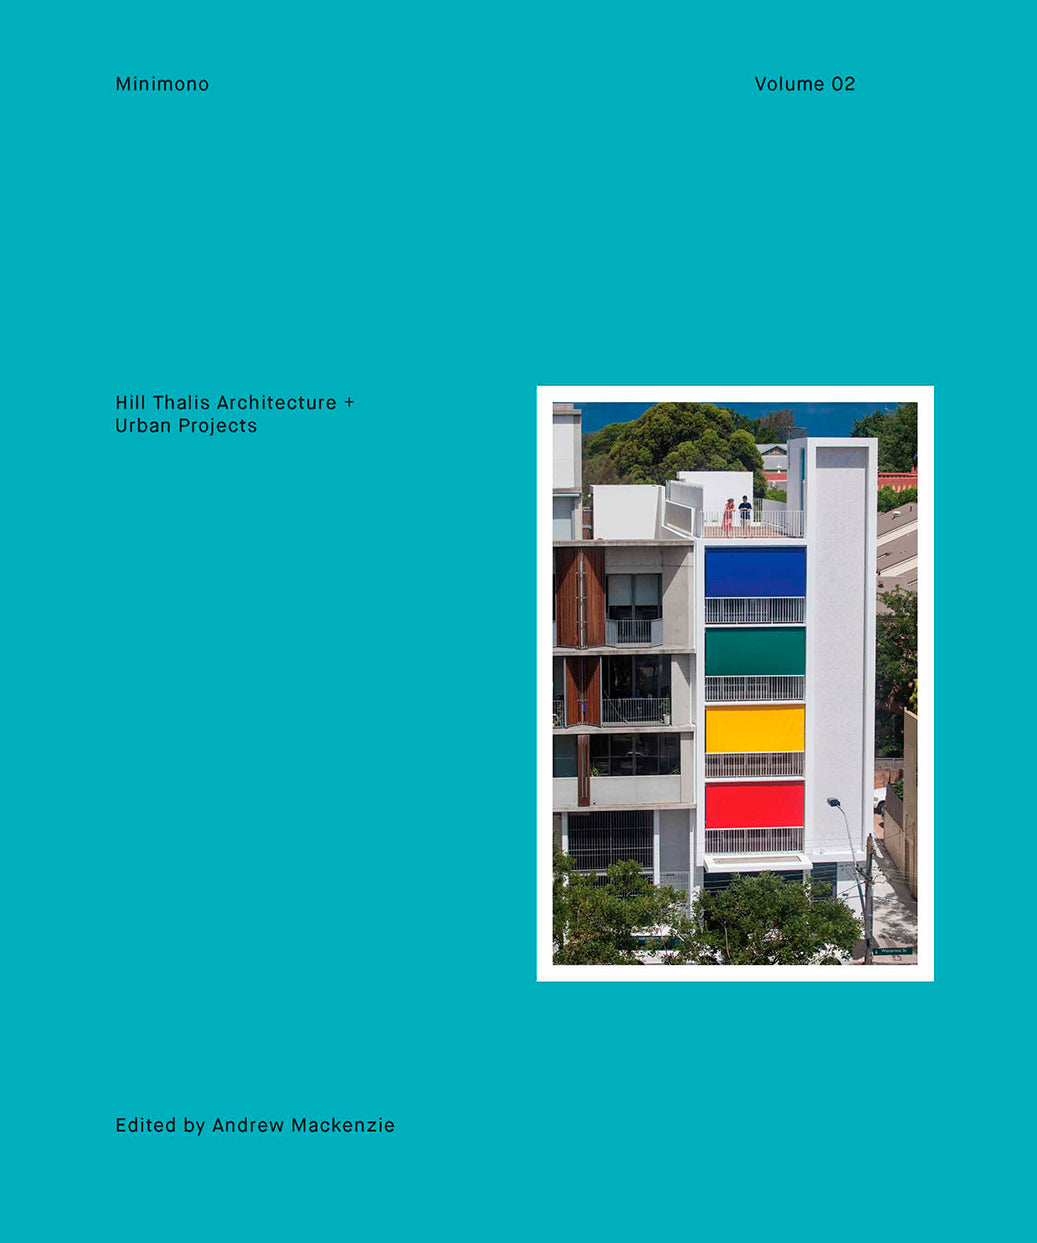 Hill Thalis Architecture + Urban Projects (Minimono Volume 02) cover